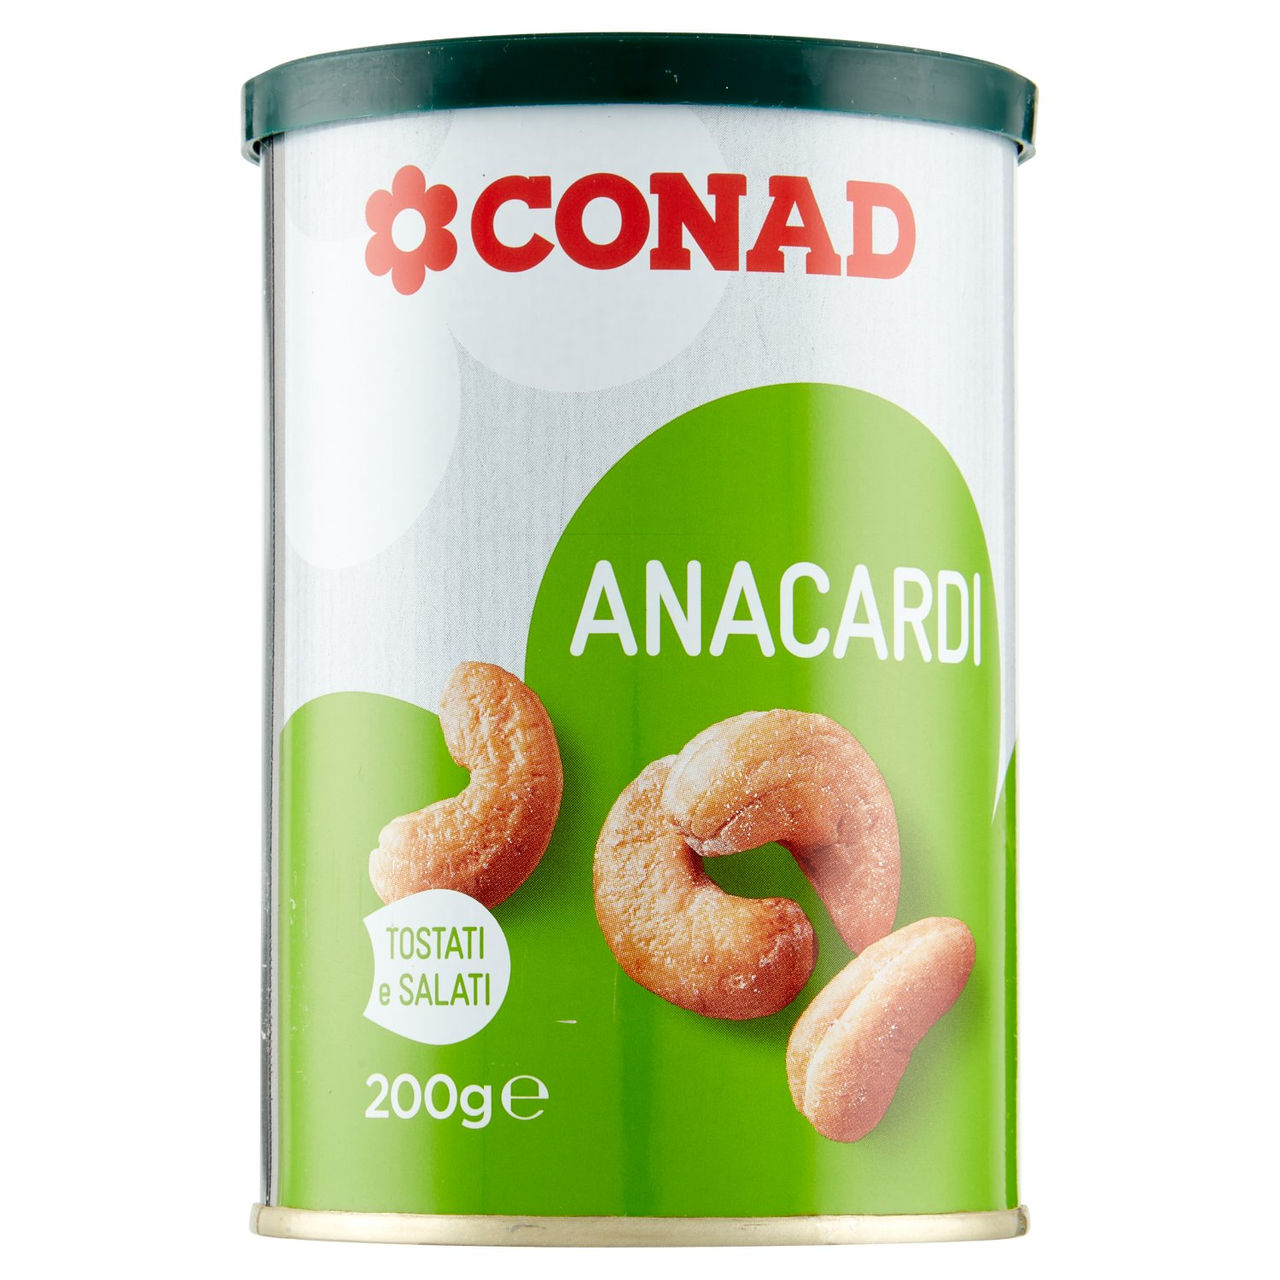 Anacardi Tostati e Salati Conad in vendita online